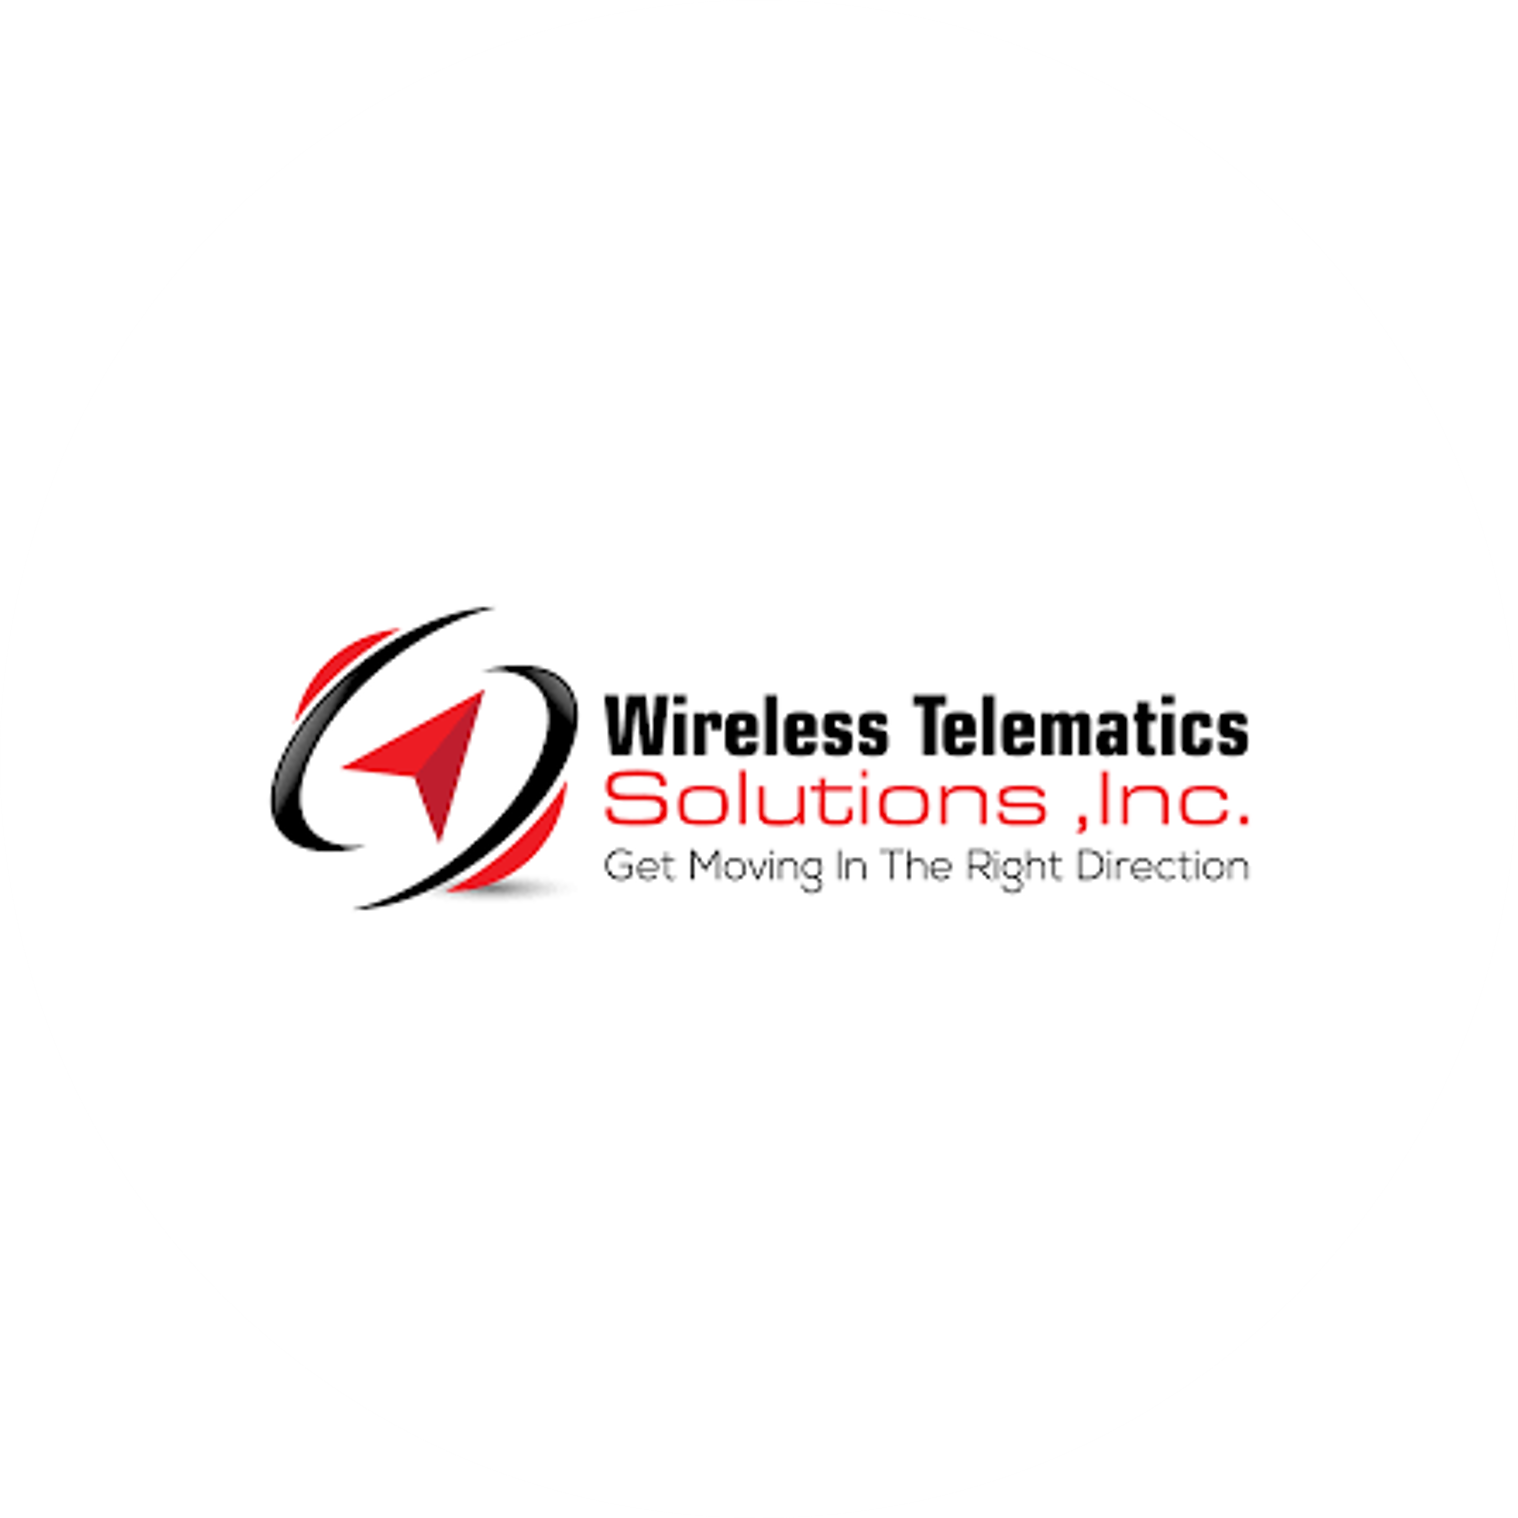 Wireless Telematics Solutions